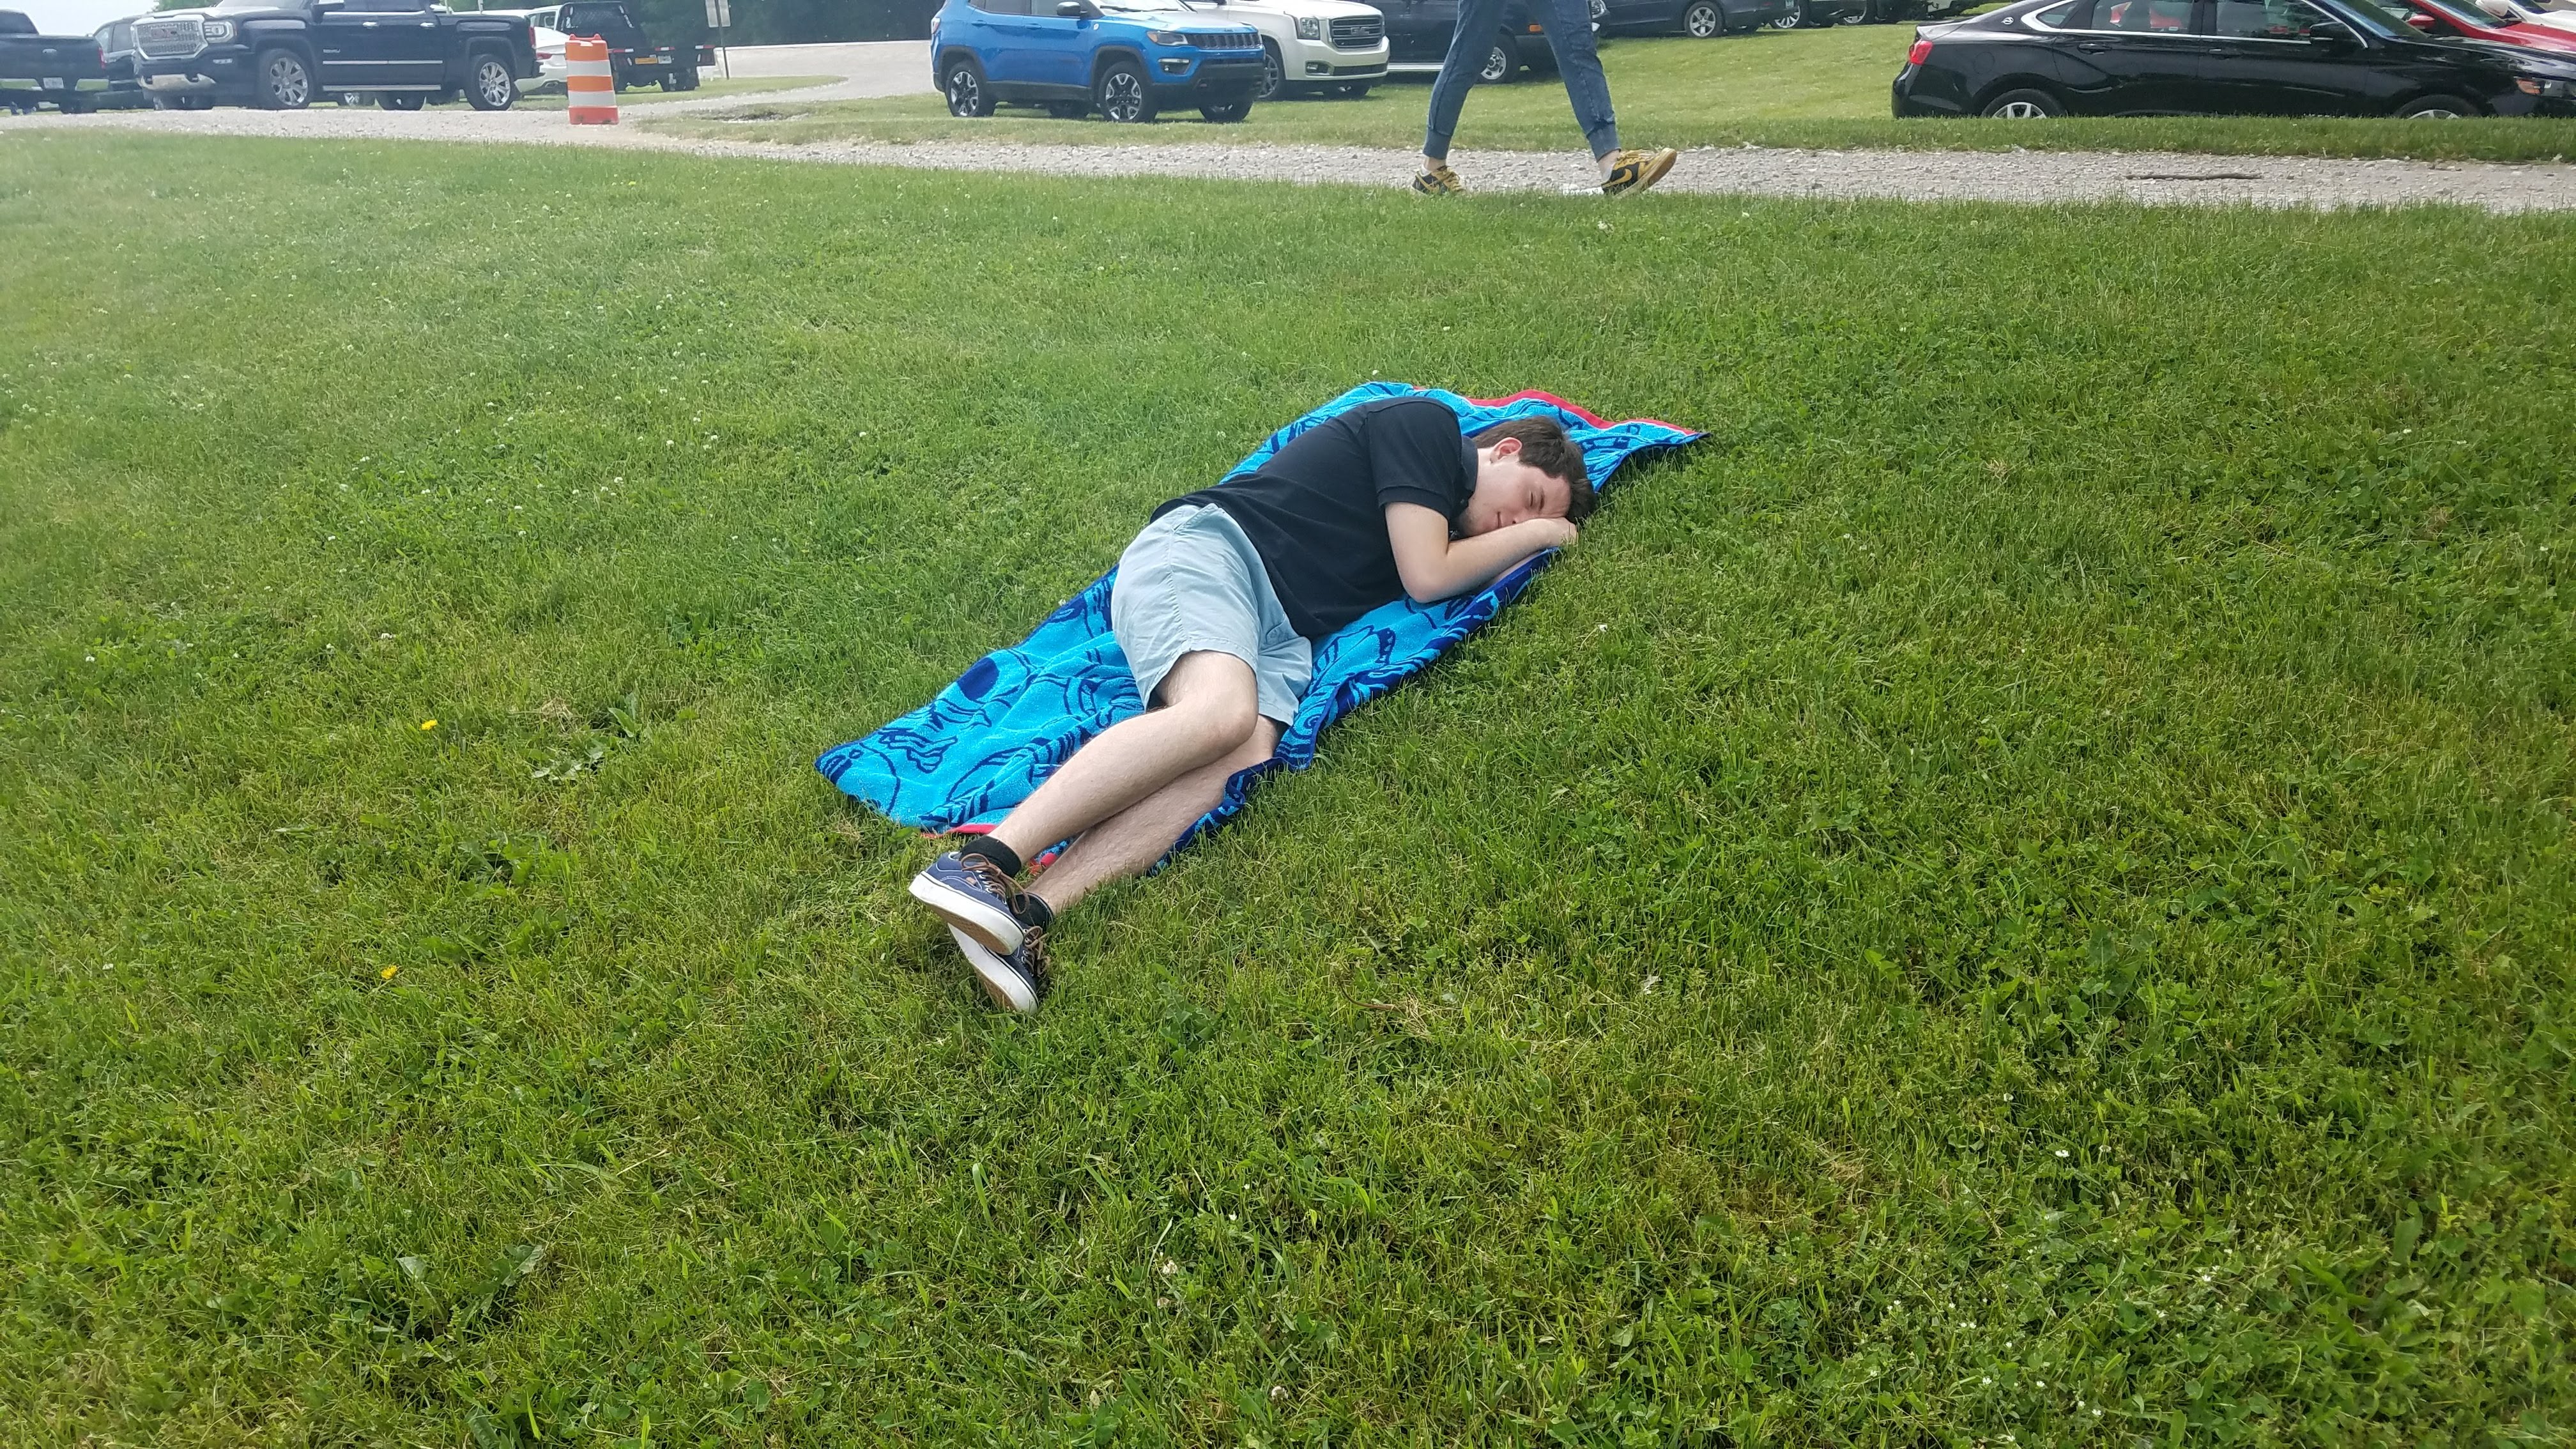 Tomas sleeping on the grass